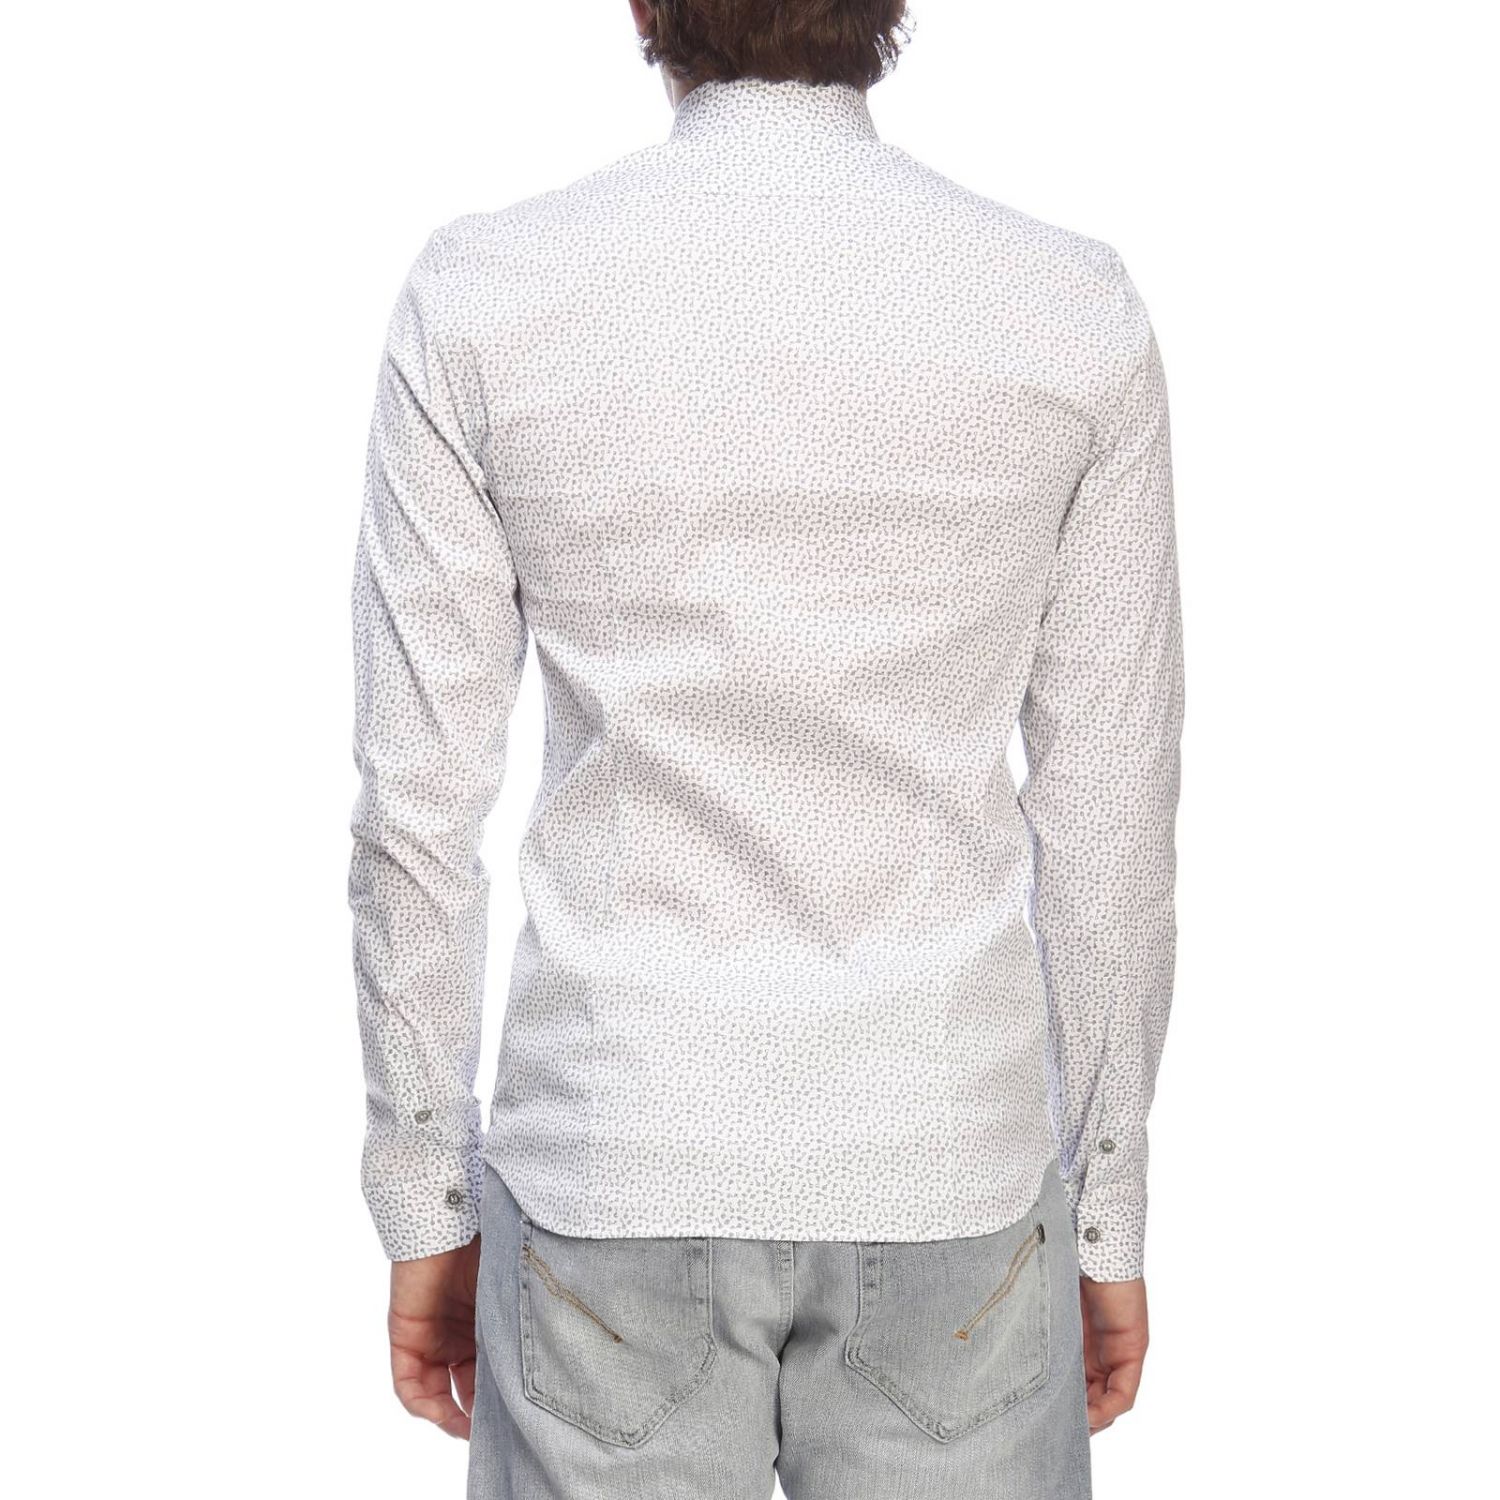 Patrizia Pepe Outlet: shirt for man - White | Patrizia Pepe shirt ...